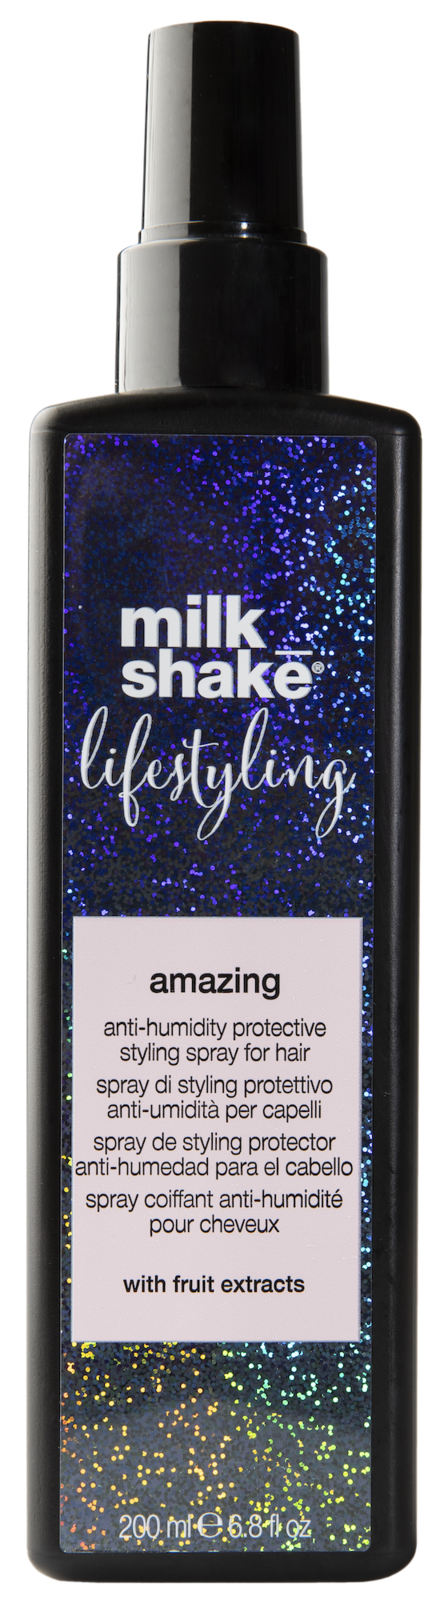 milk_shake Lifestyling Amazing 200ml